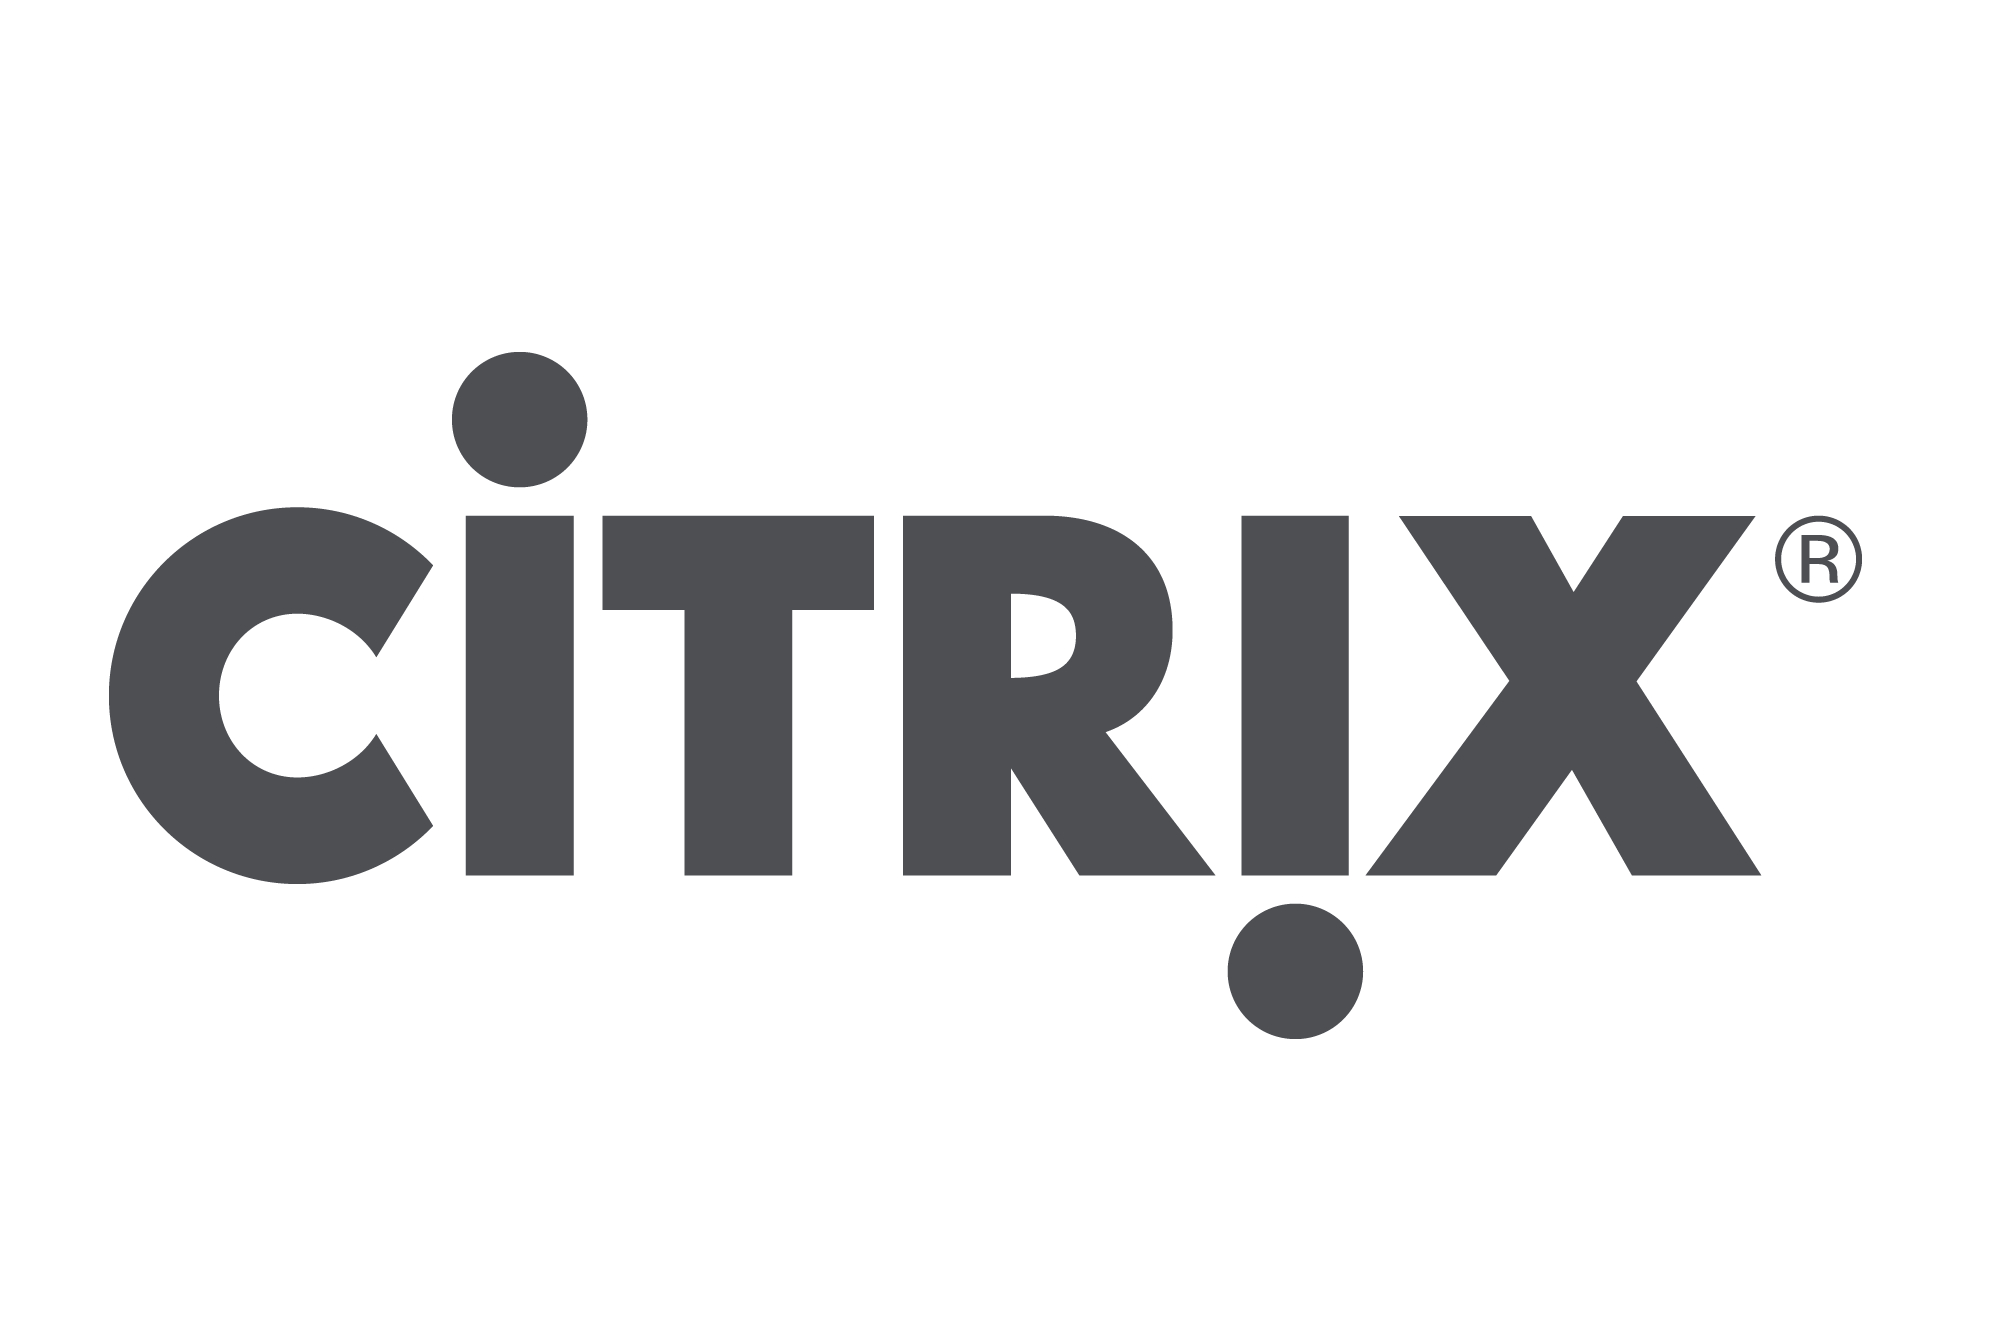 Citrix company logo